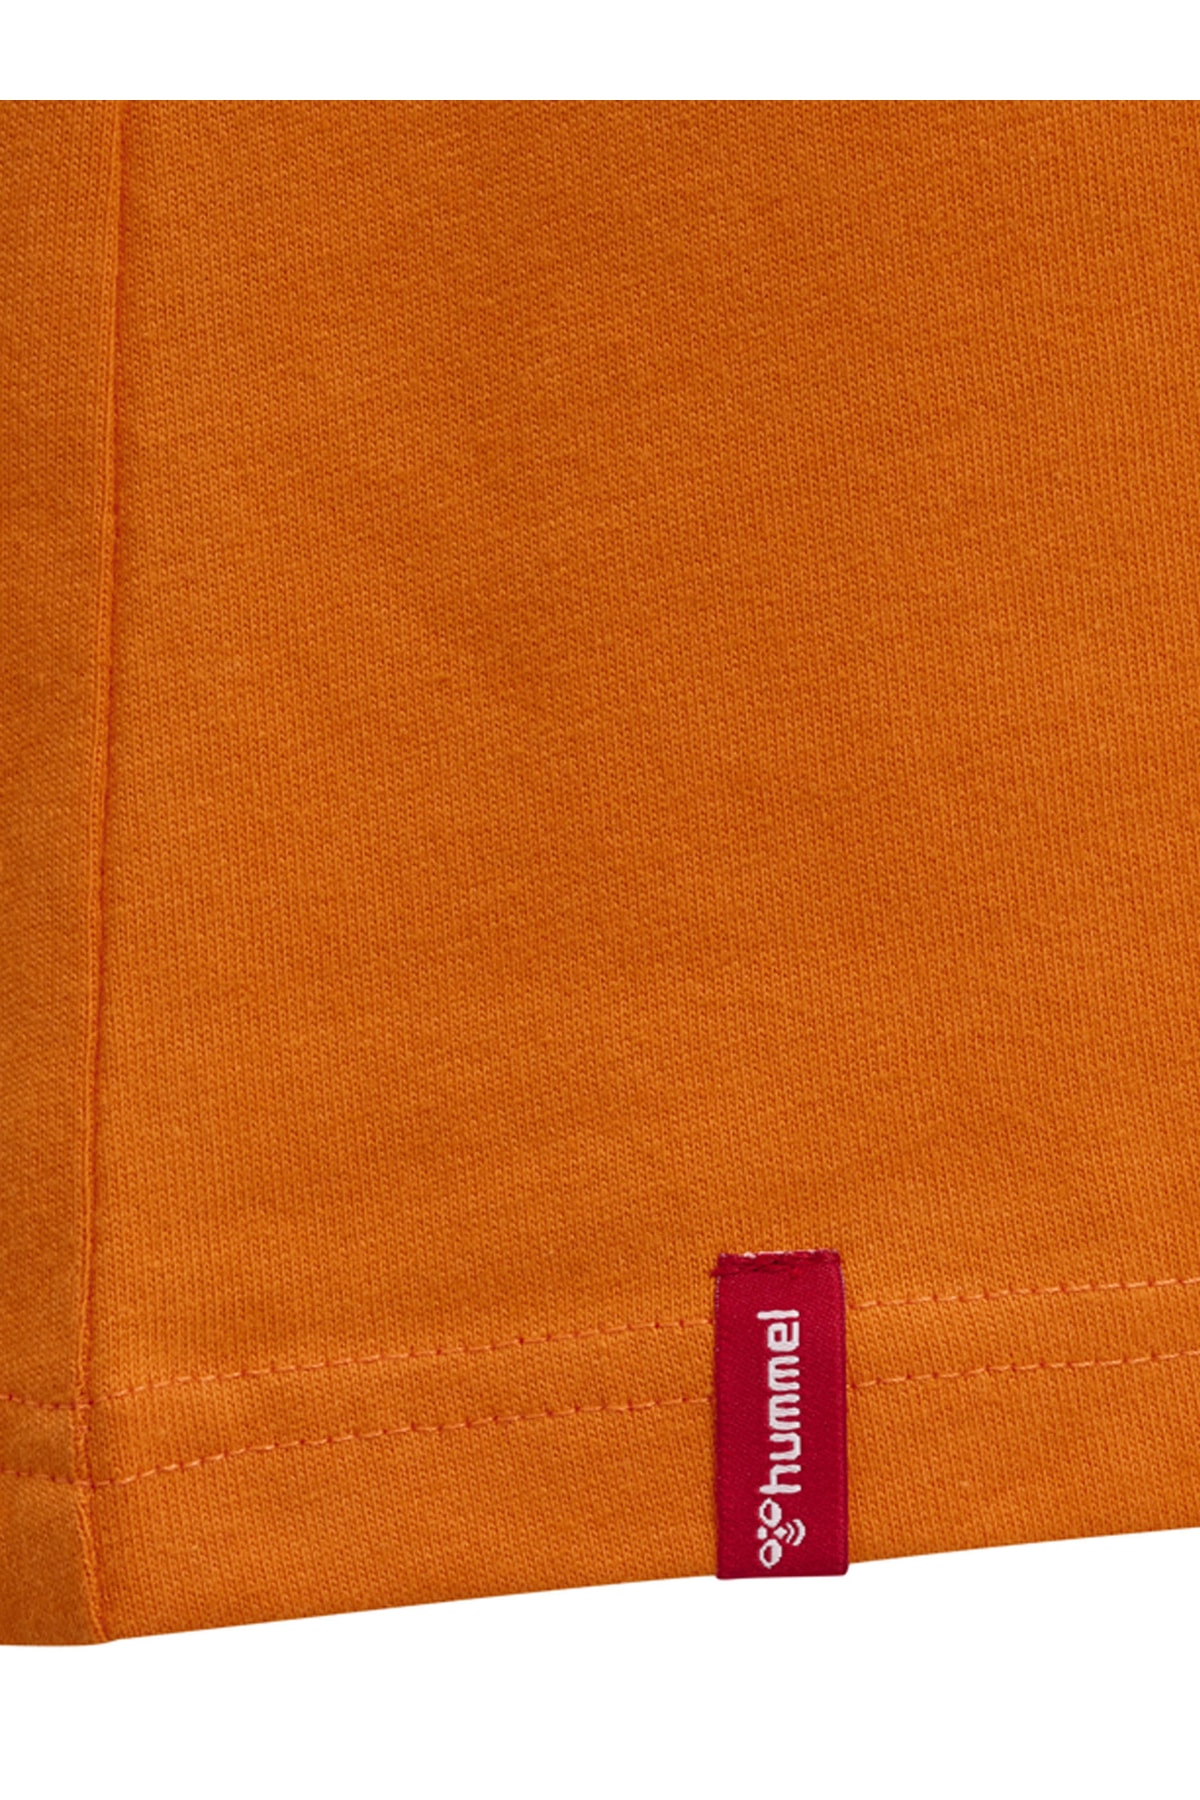 HUMMEL T-Shirt Orange Regular Fit FN6370